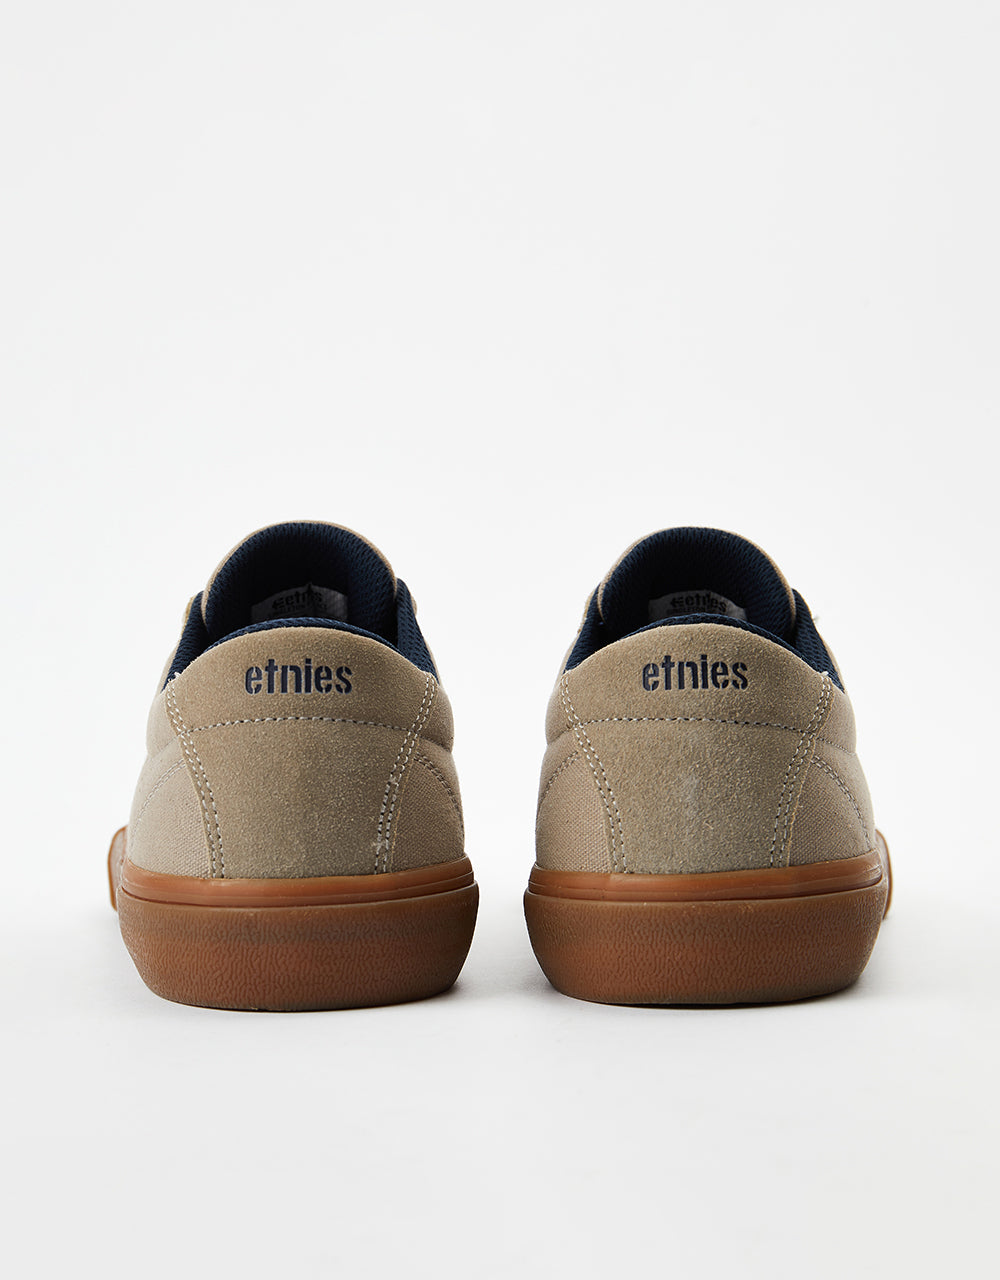 Etnies x Michelin Singleton Vulc XLT Skate Shoes - Tan/Gum